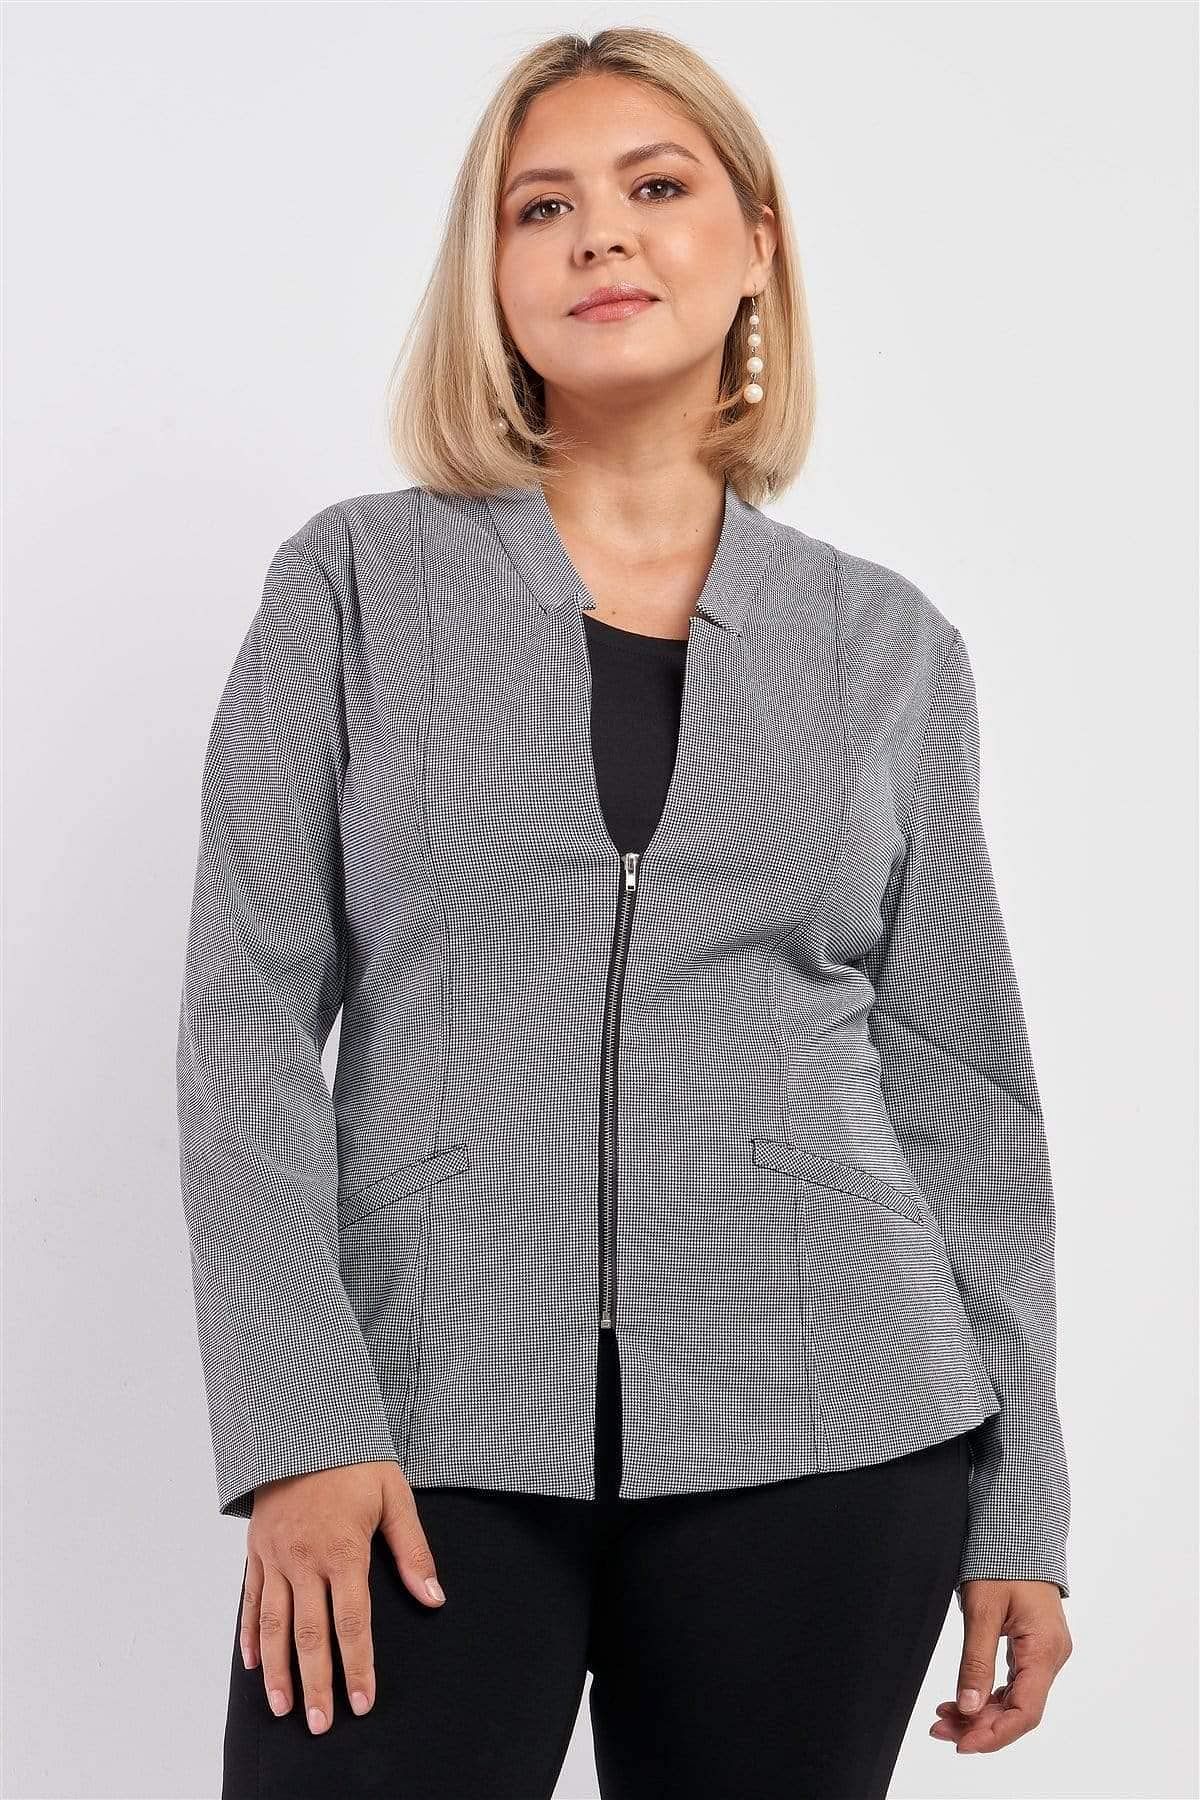 Gray Plus Size Long Sleeve Jacket - Shopping Therapy 1XL Jacket